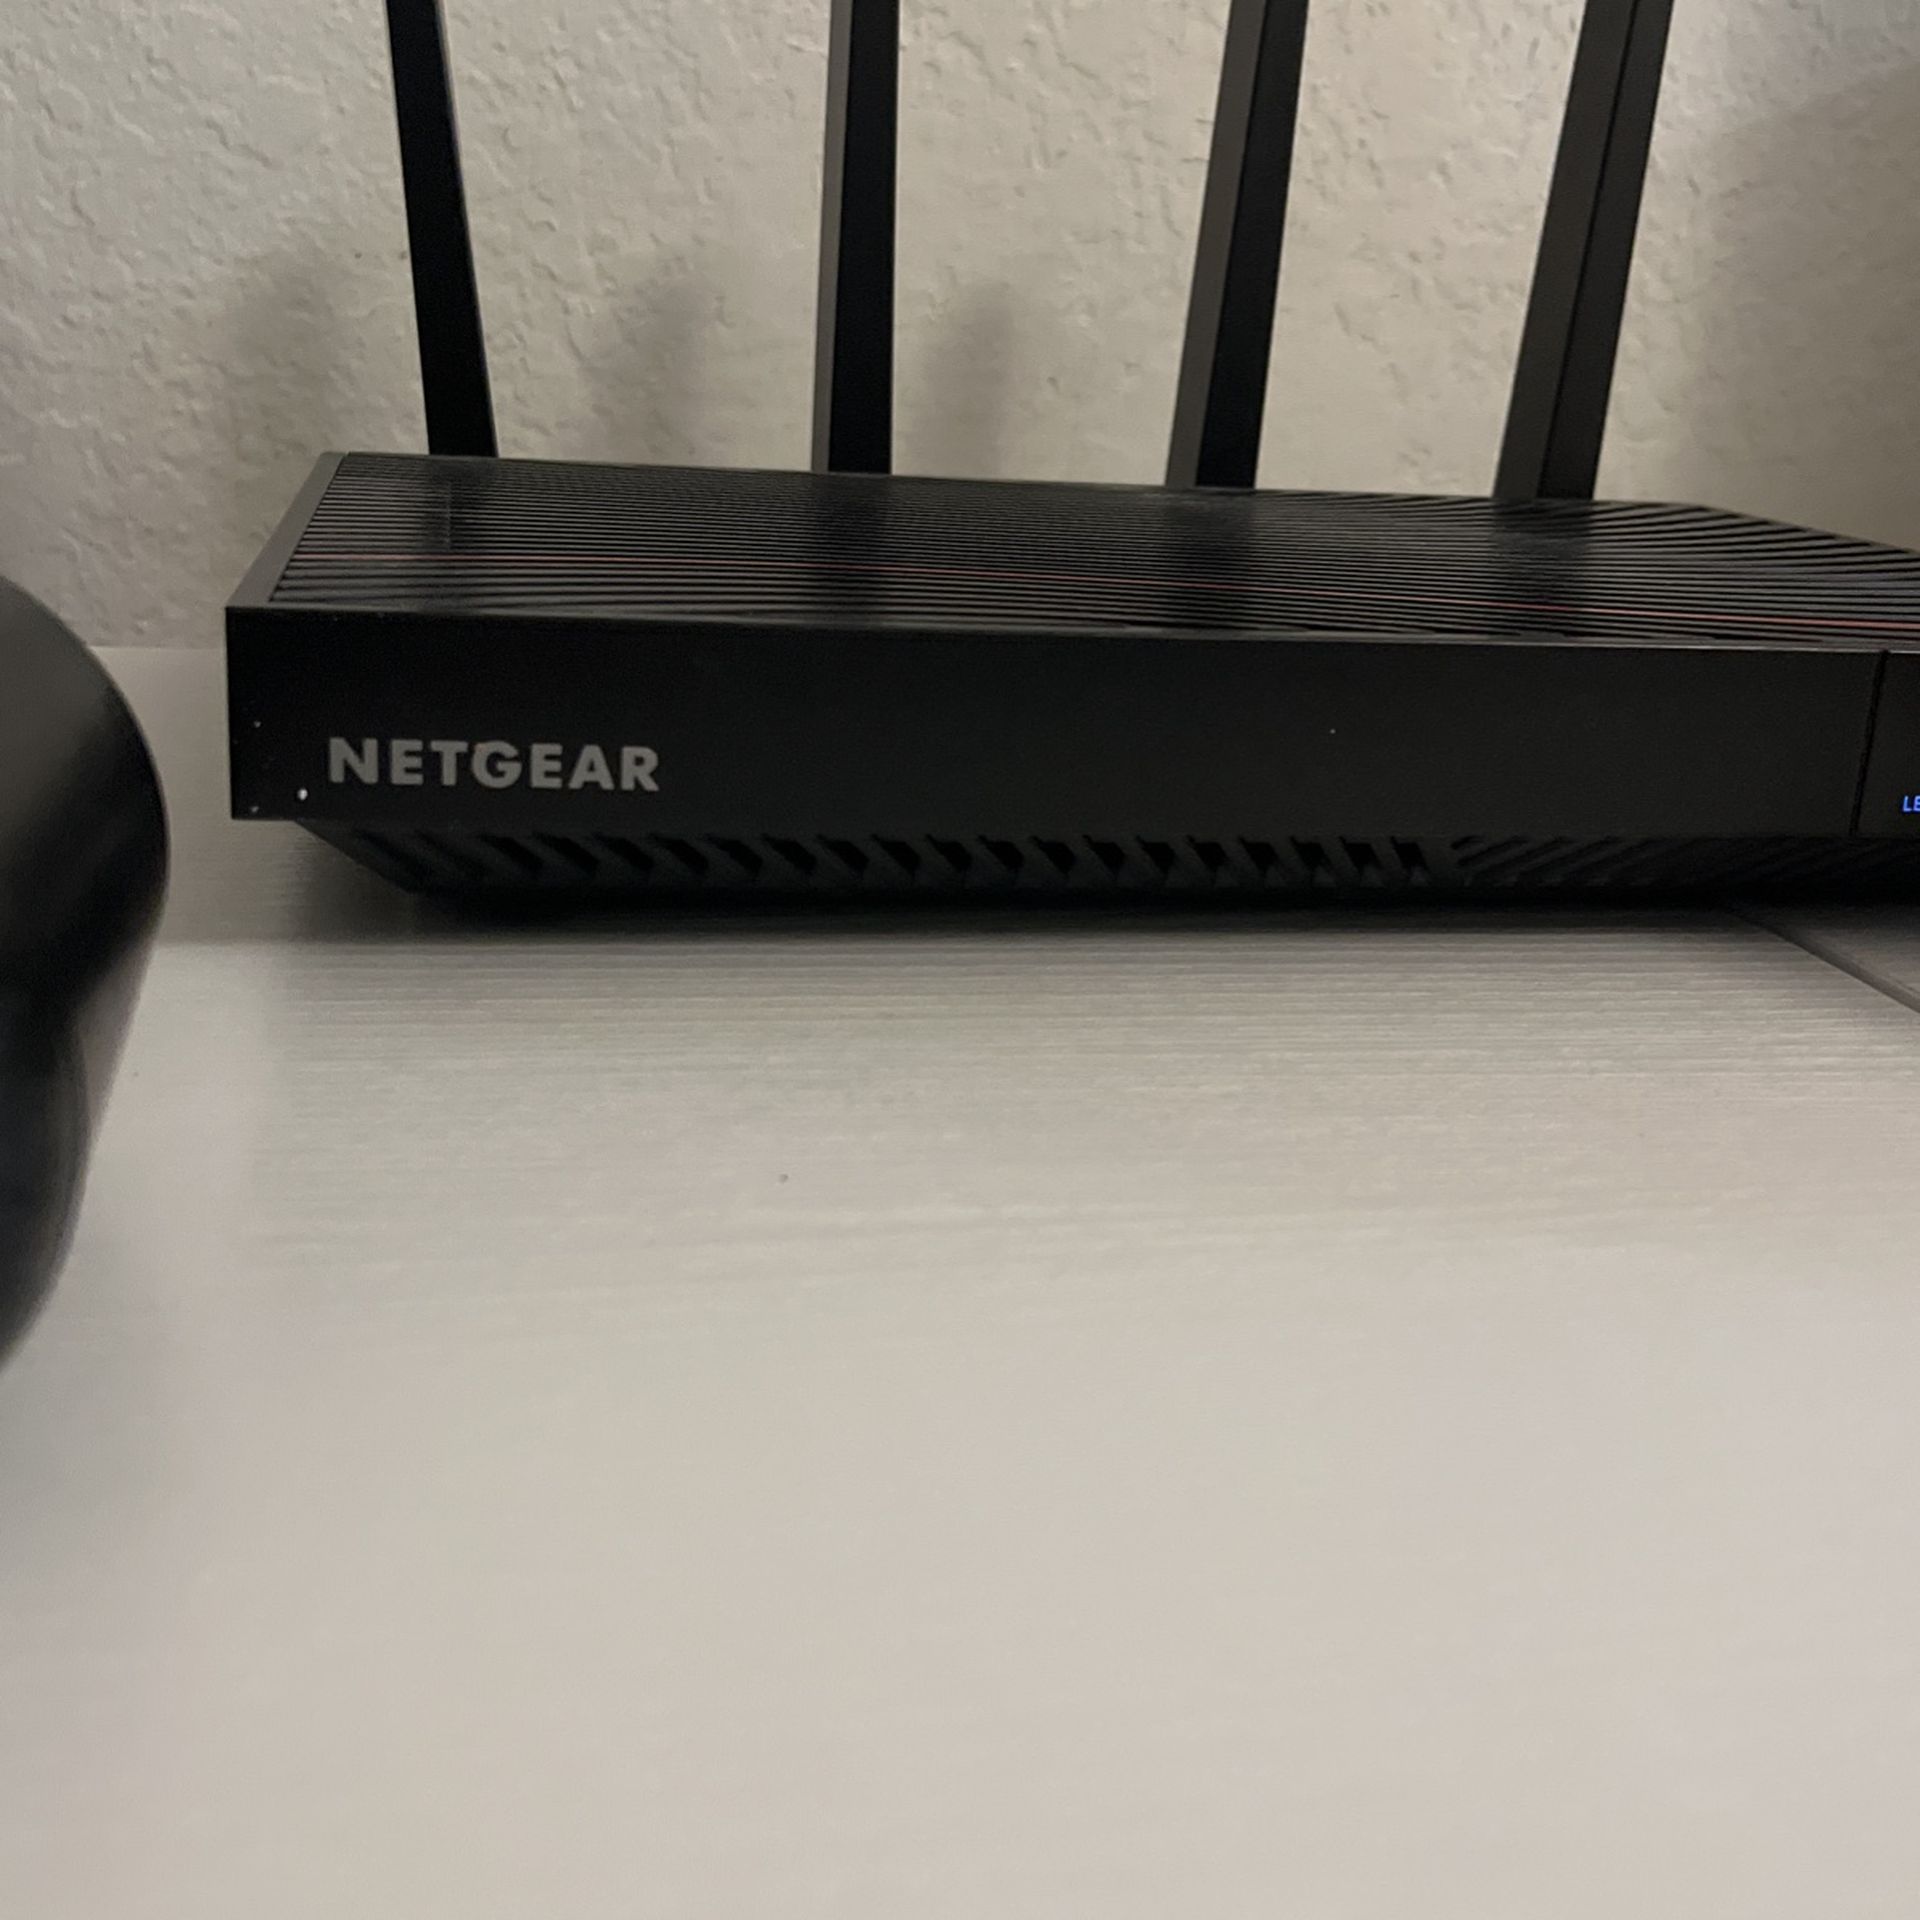 Netgear Nighthawk Gaming Router/Modem Combo